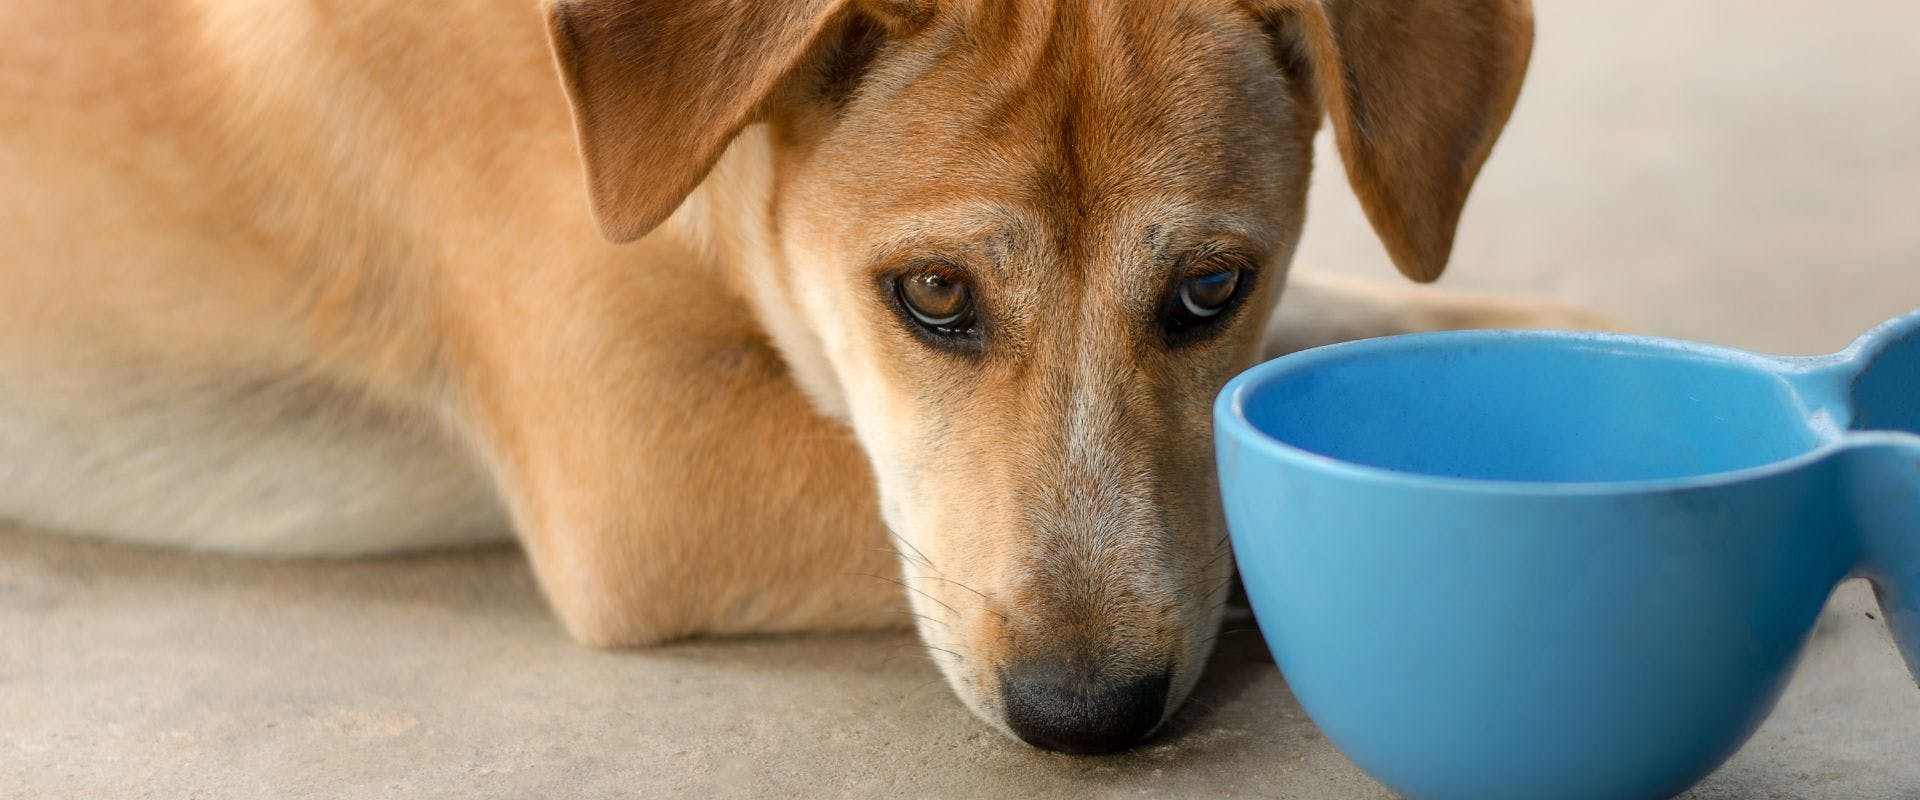 Beige dog sitting next to a blue bowl